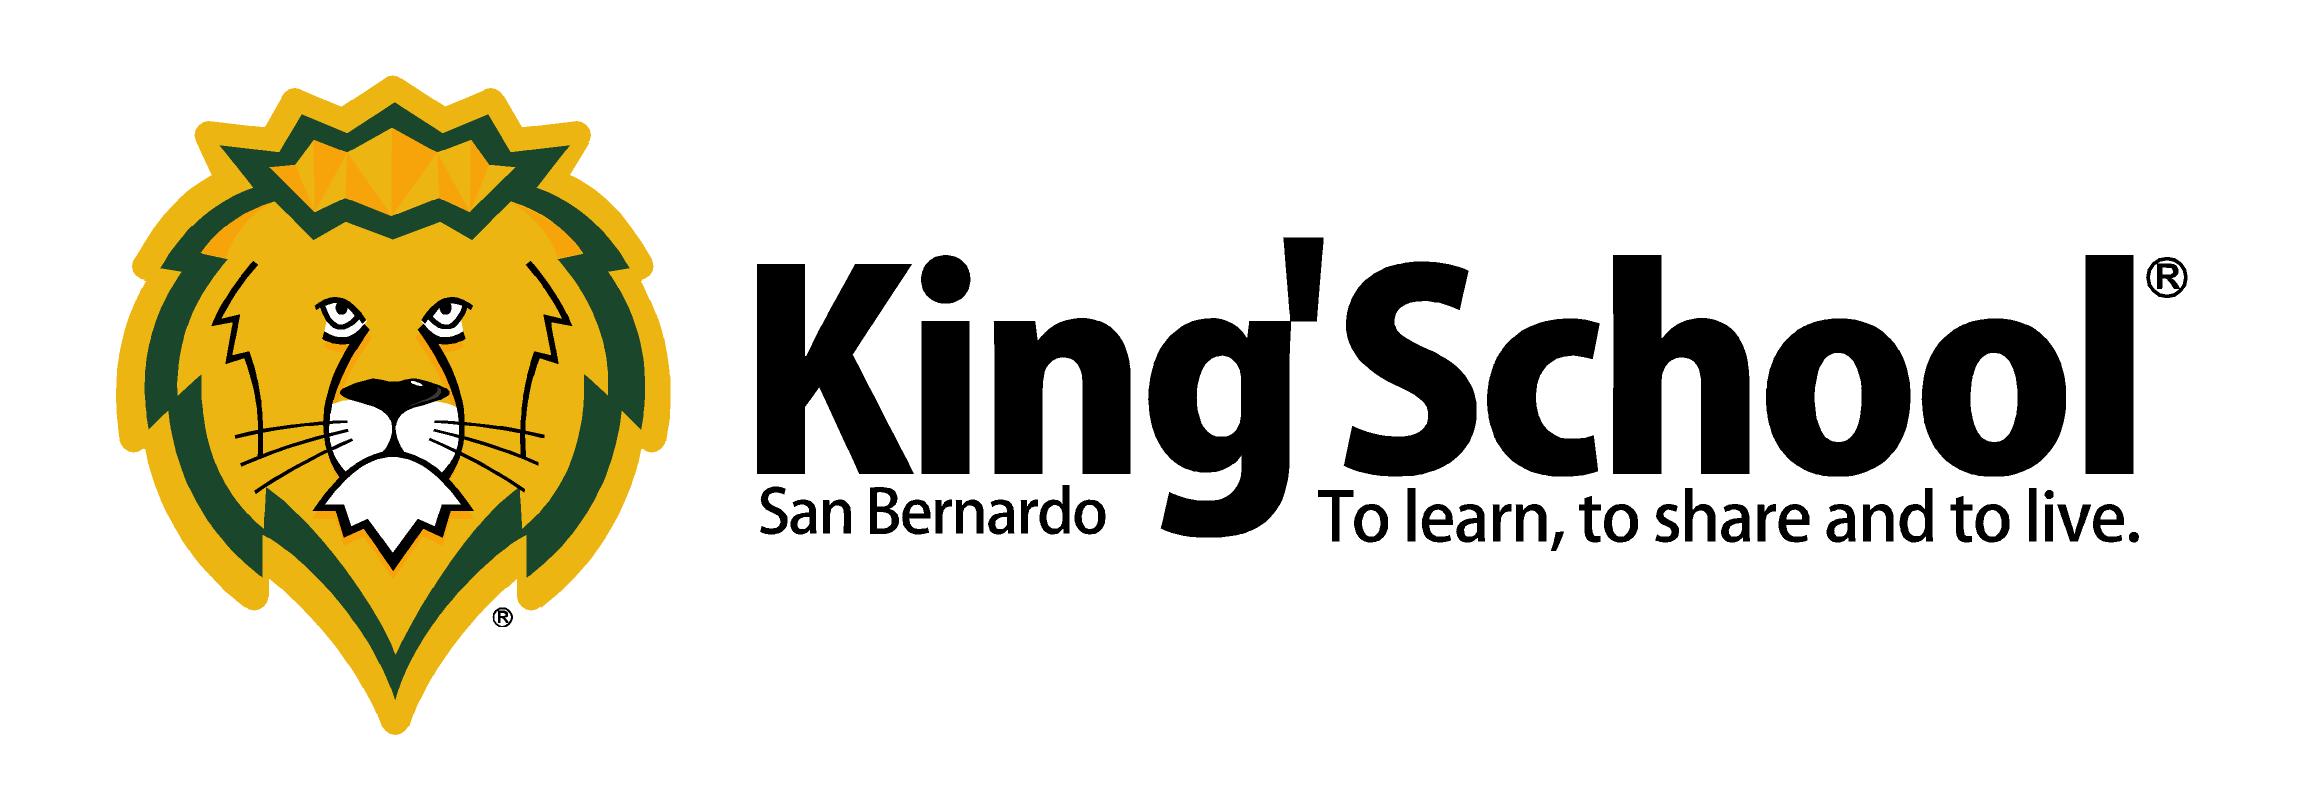 kings_san_bernardo